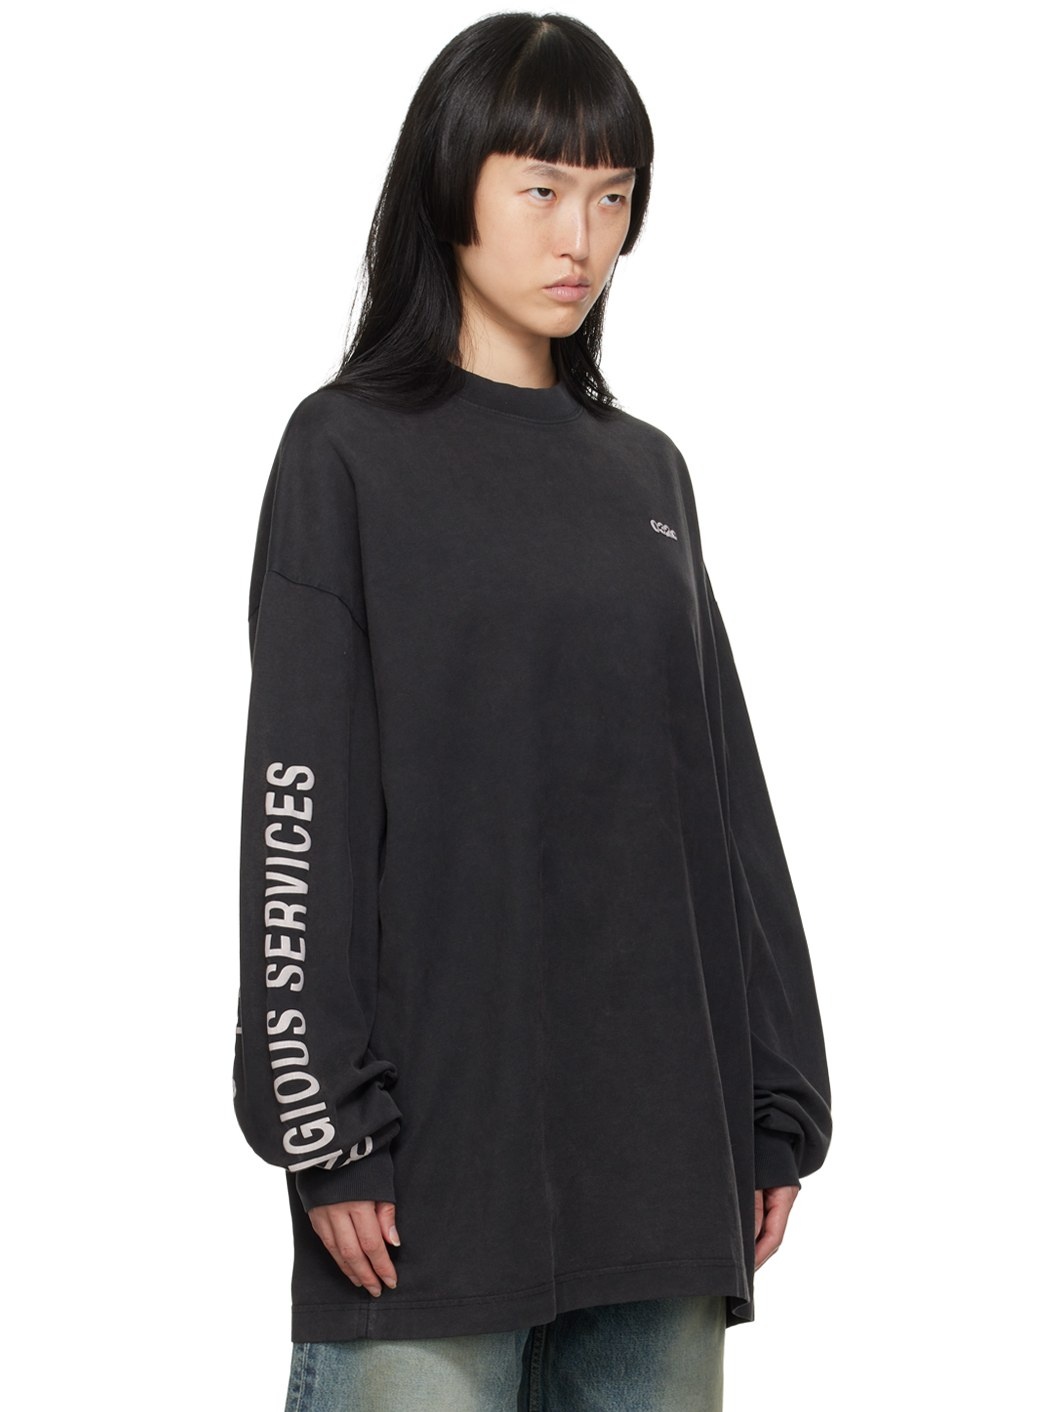 SSENSE XX Black Long Sleeve ’Religious Services' T-Shirt - 2